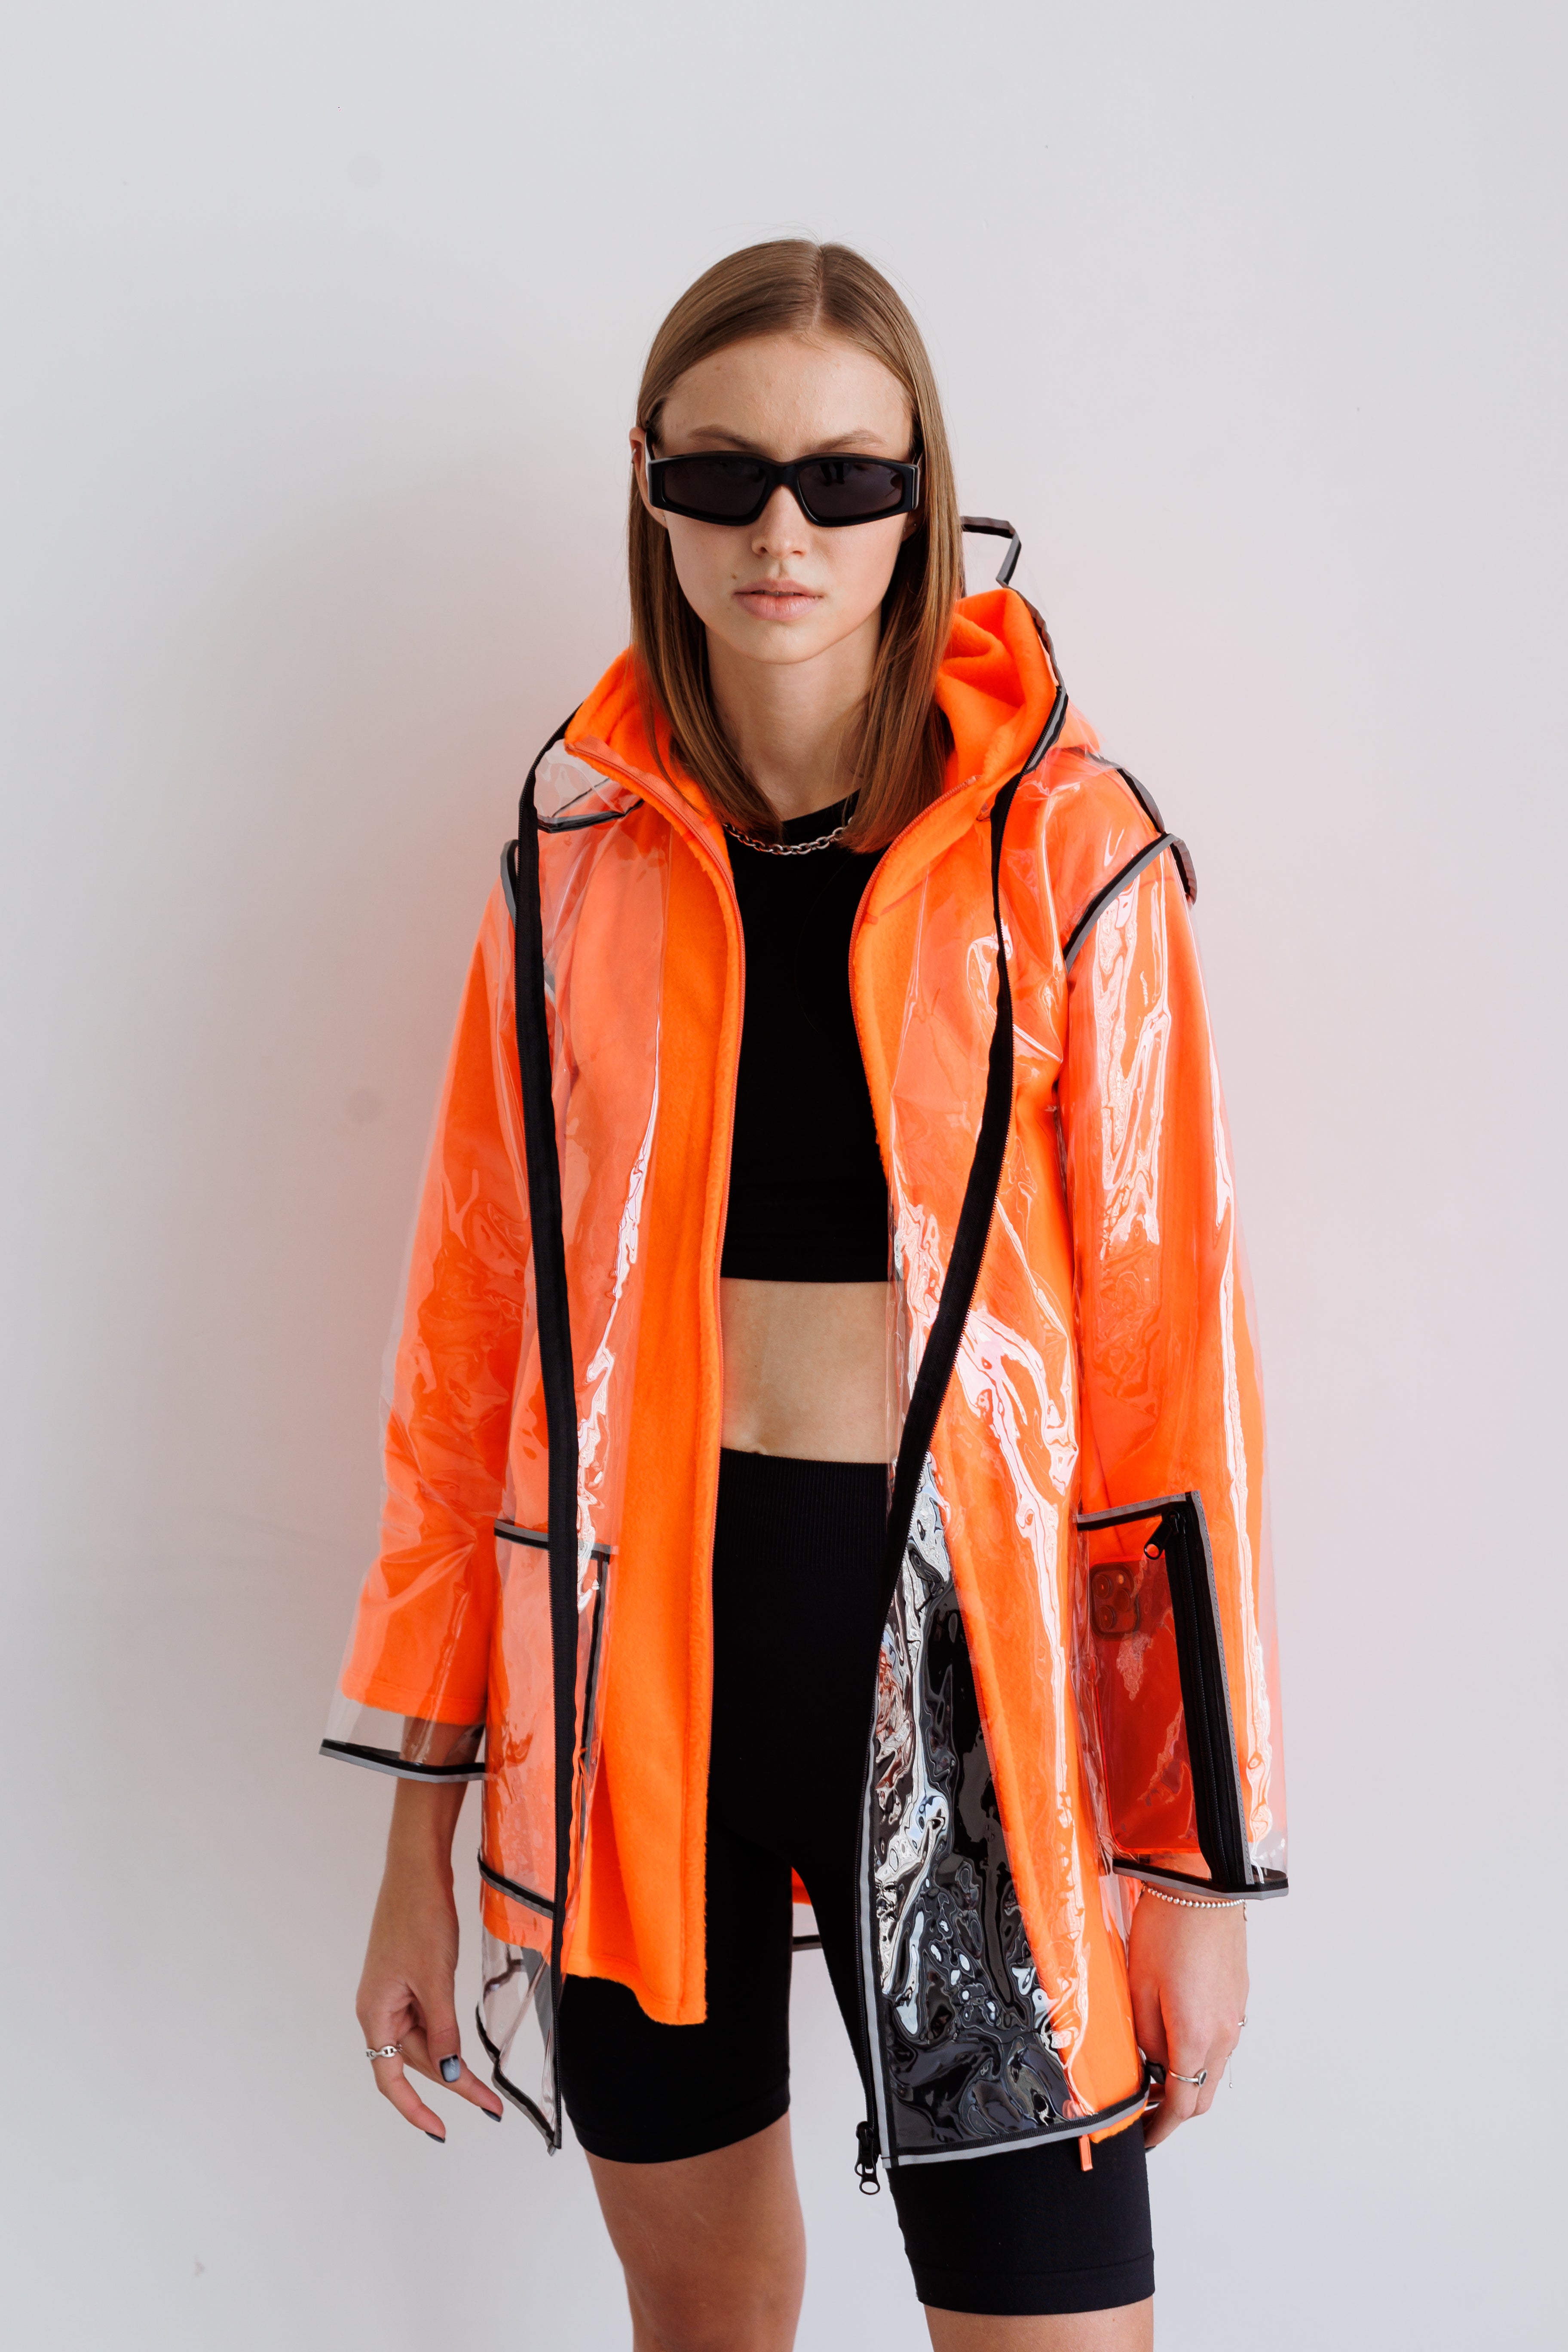 Transparenter Mantel mit Orange